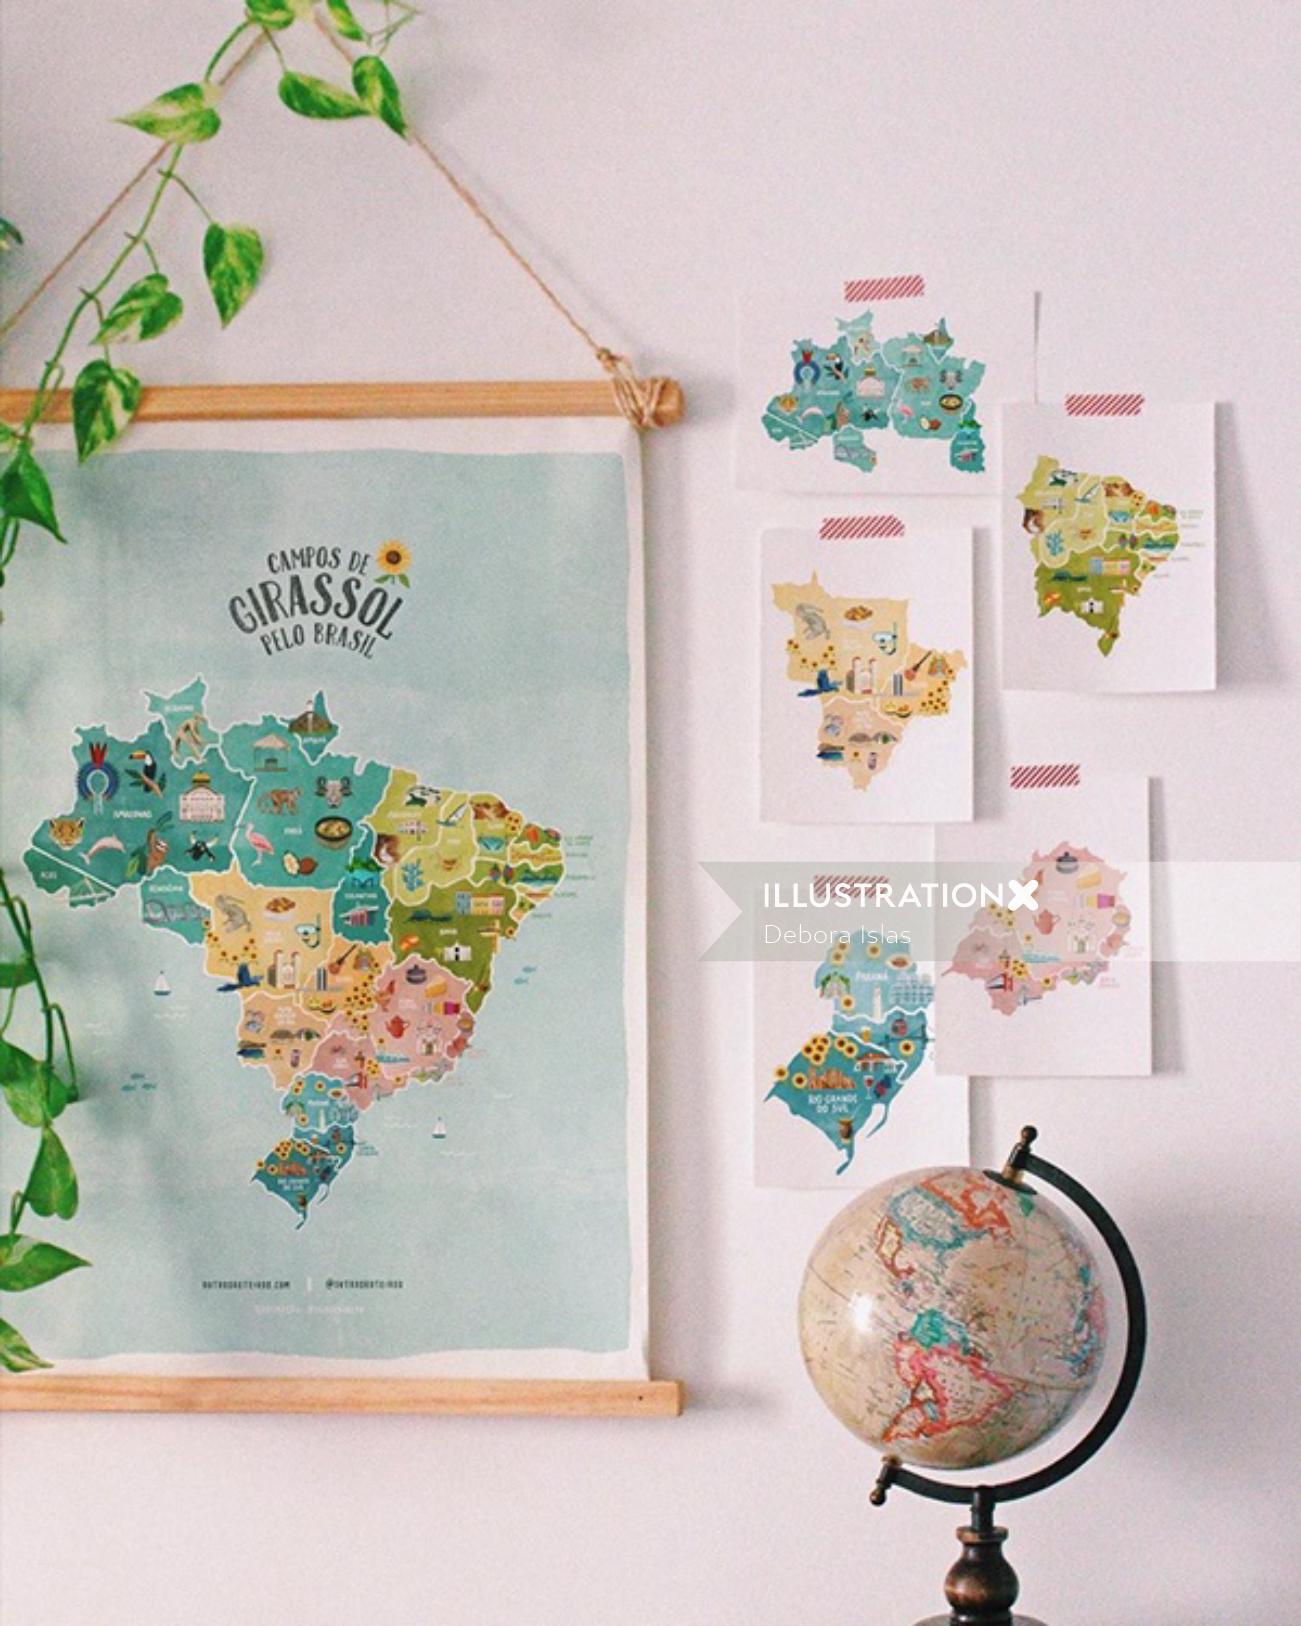 Brazil maps illustration by Debora Islas